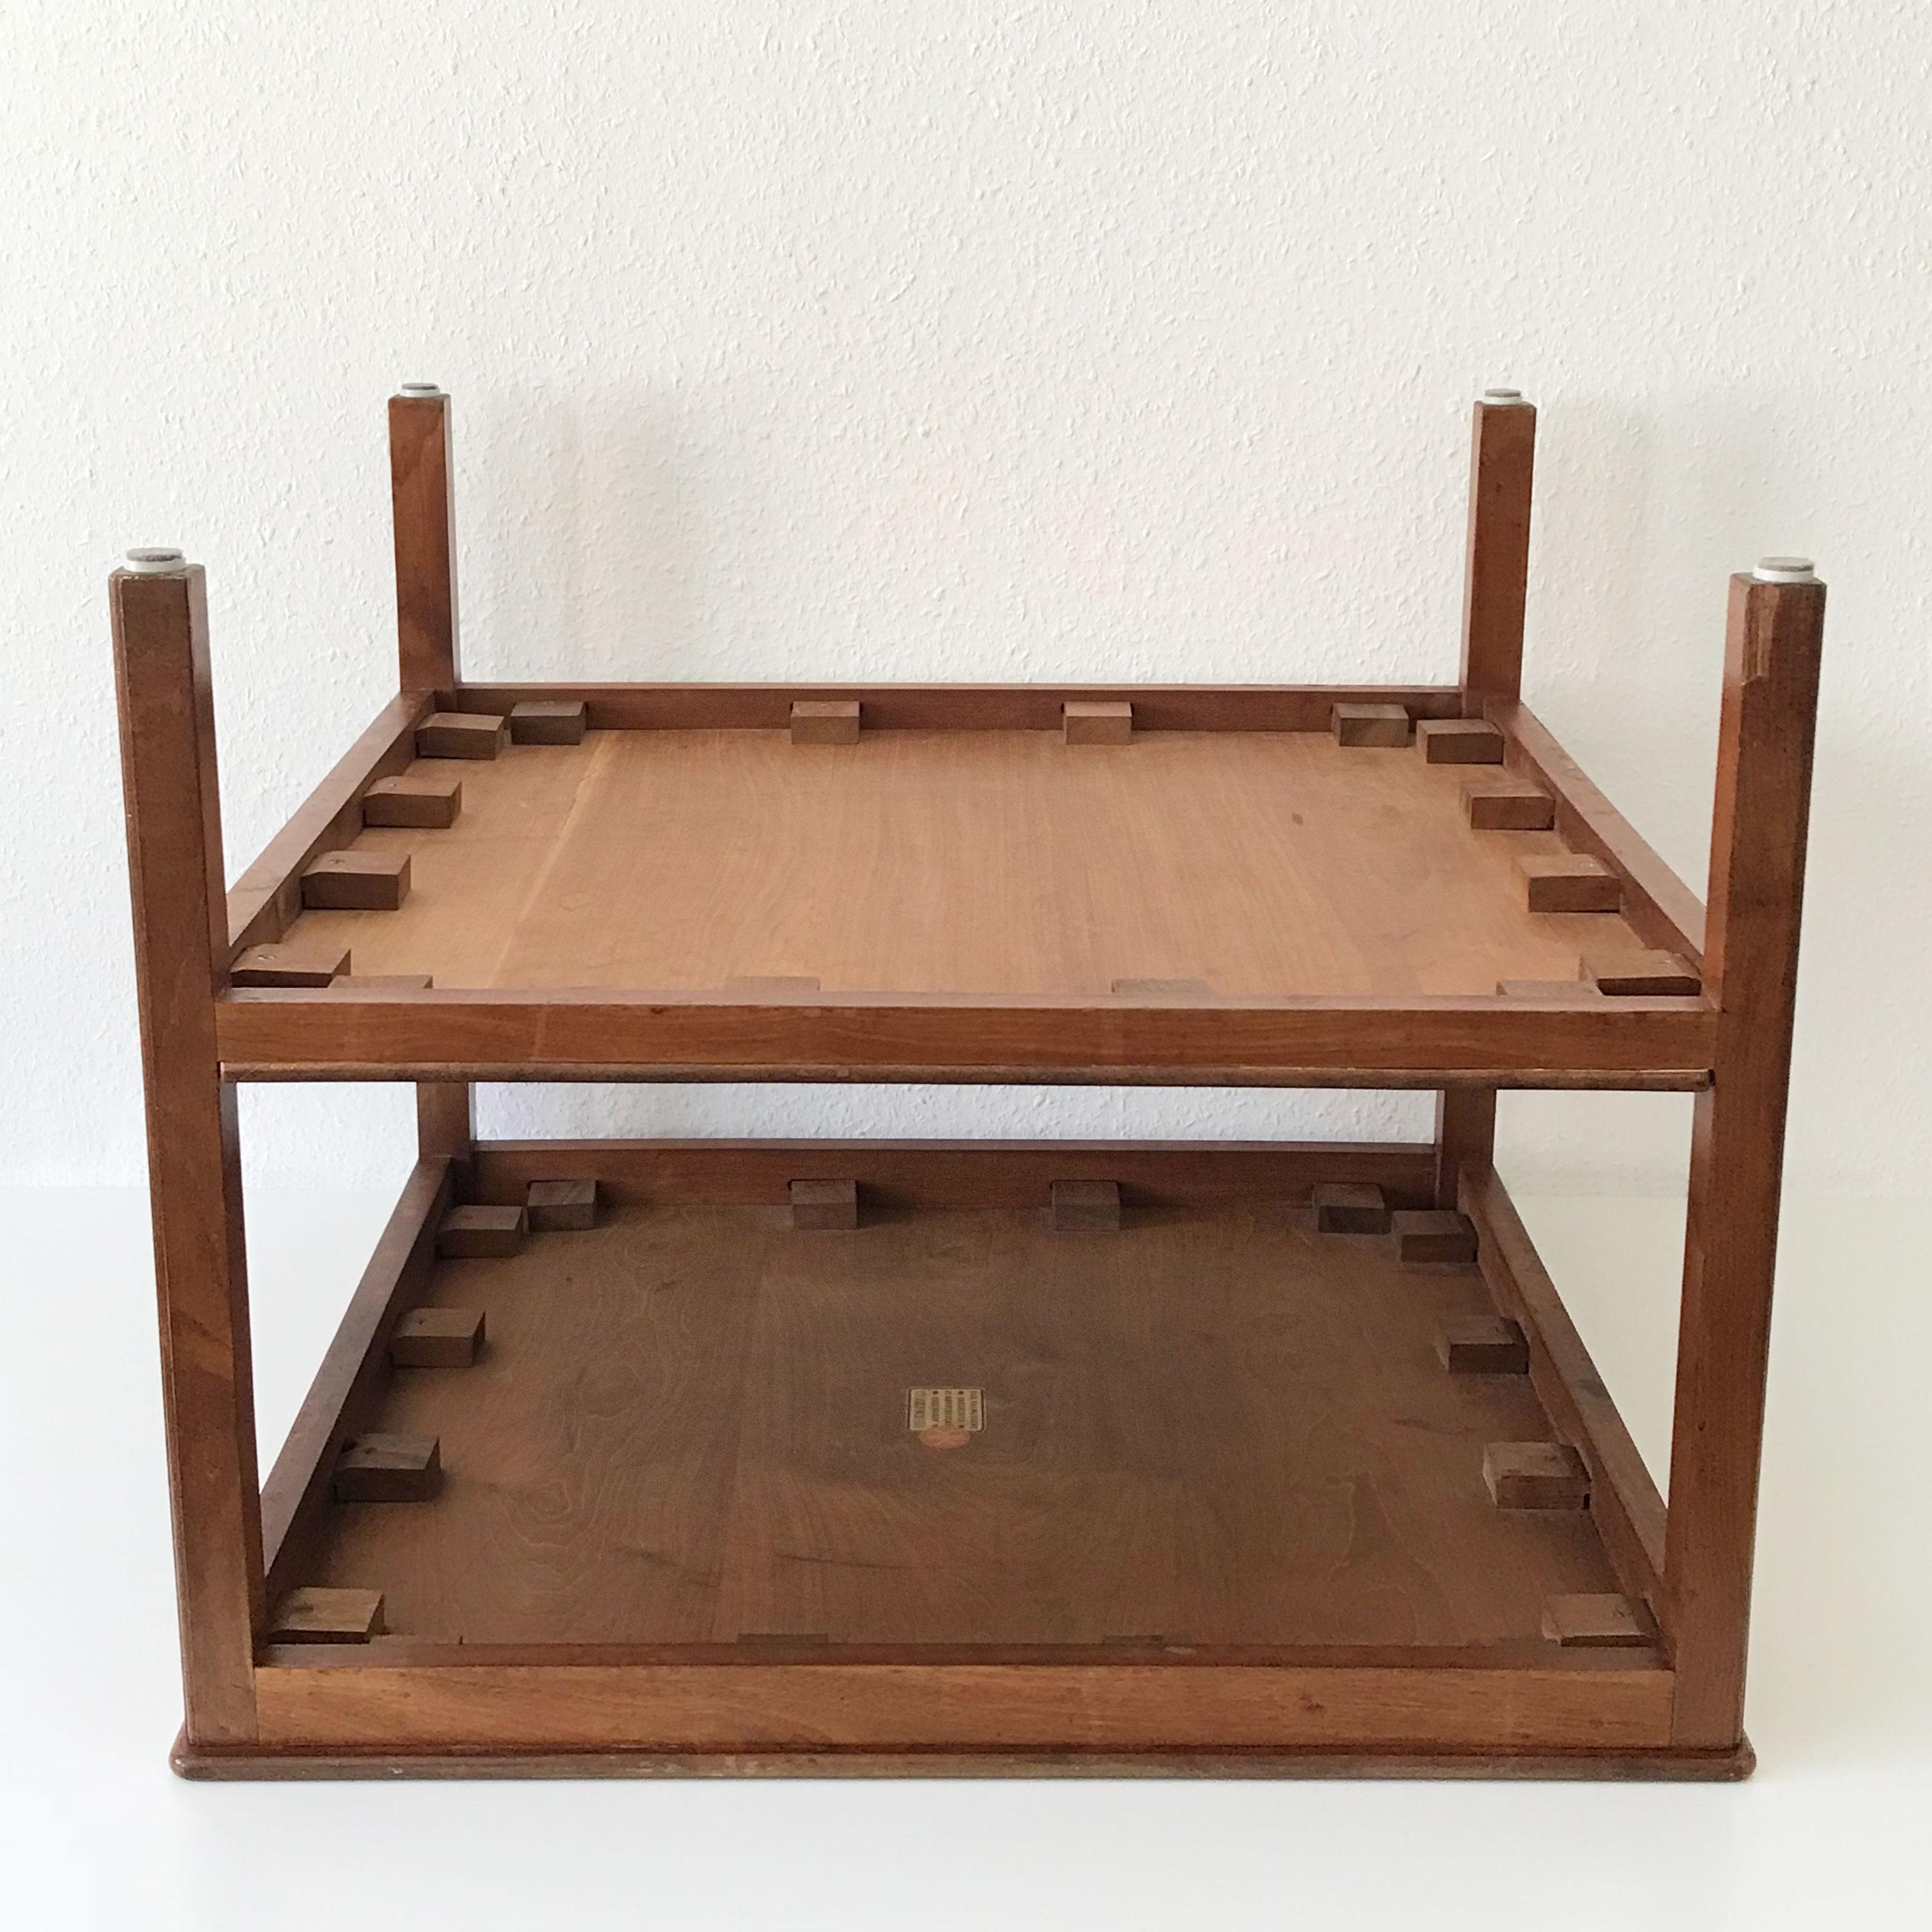 Minimalistic Coffee Mahogany Table by Kaare Klint for Rud Rasmussen Denmark 1934 For Sale 4